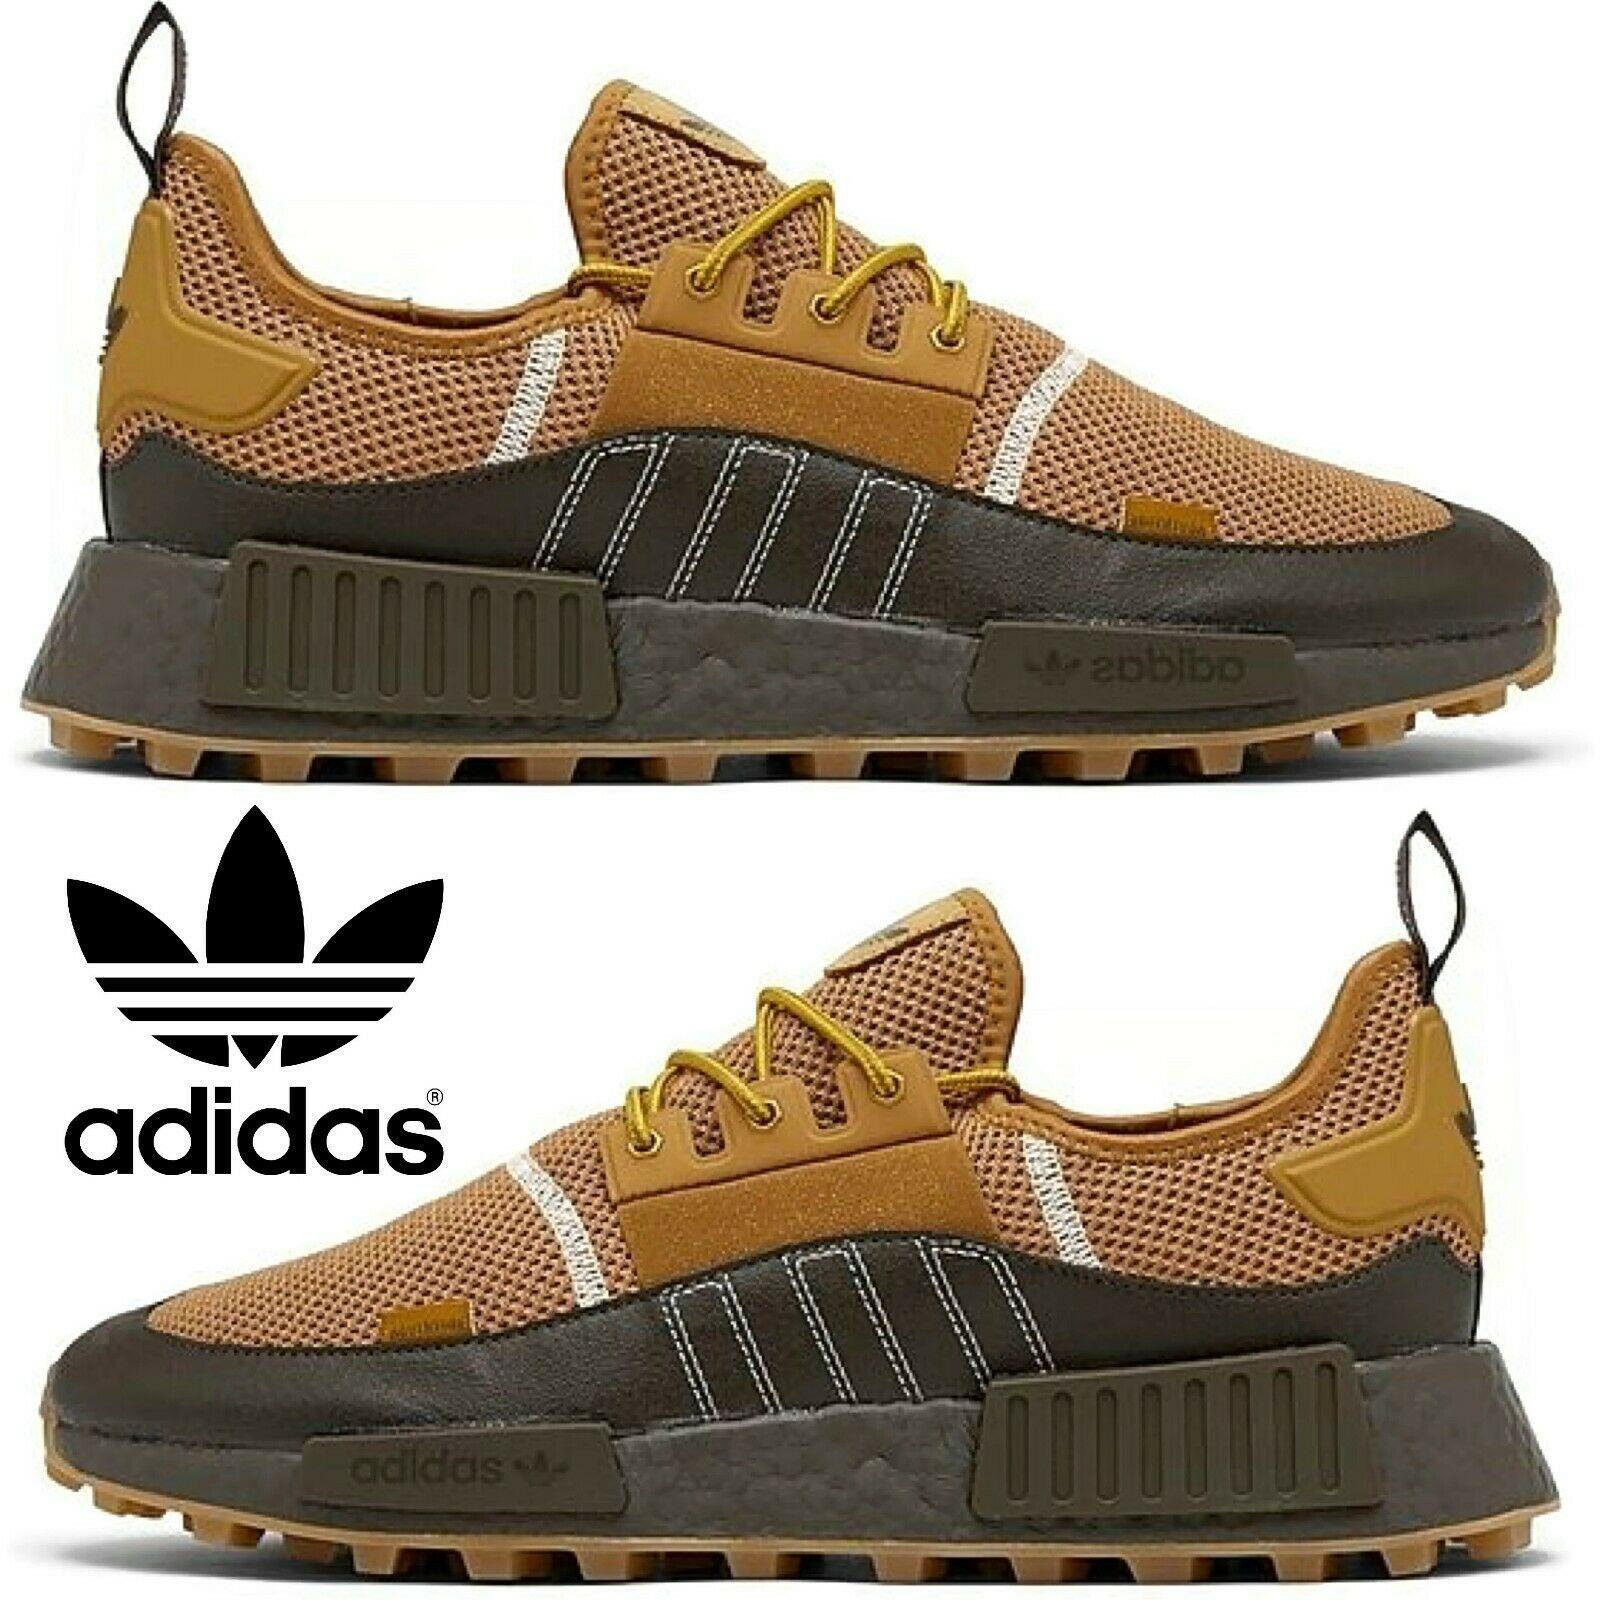 Adidas Originals Nmd R1 Men`s Sneakers Running Shoes Gym Casual Sport Brown - Brown , Mesa/Cream White/Gum Manufacturer